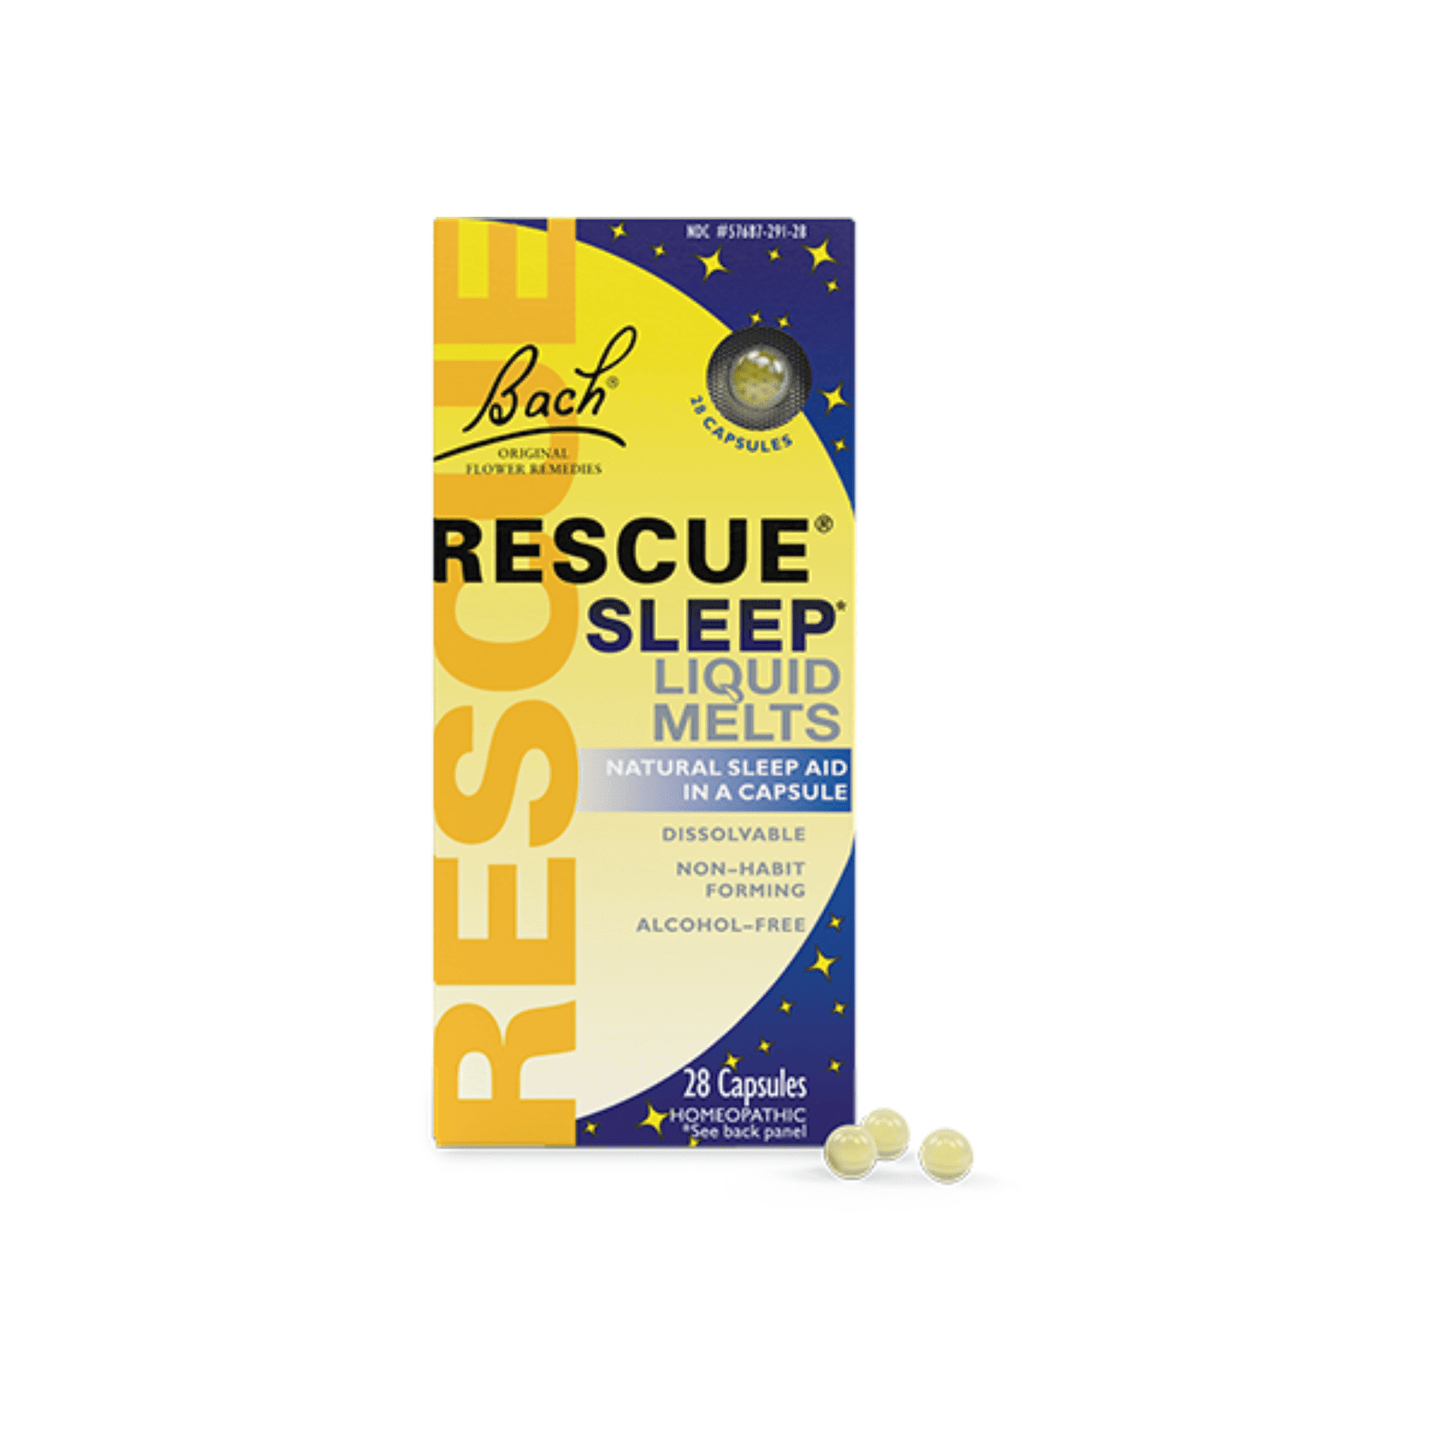 Primary Image of Rescue Sleep Liquid Melts